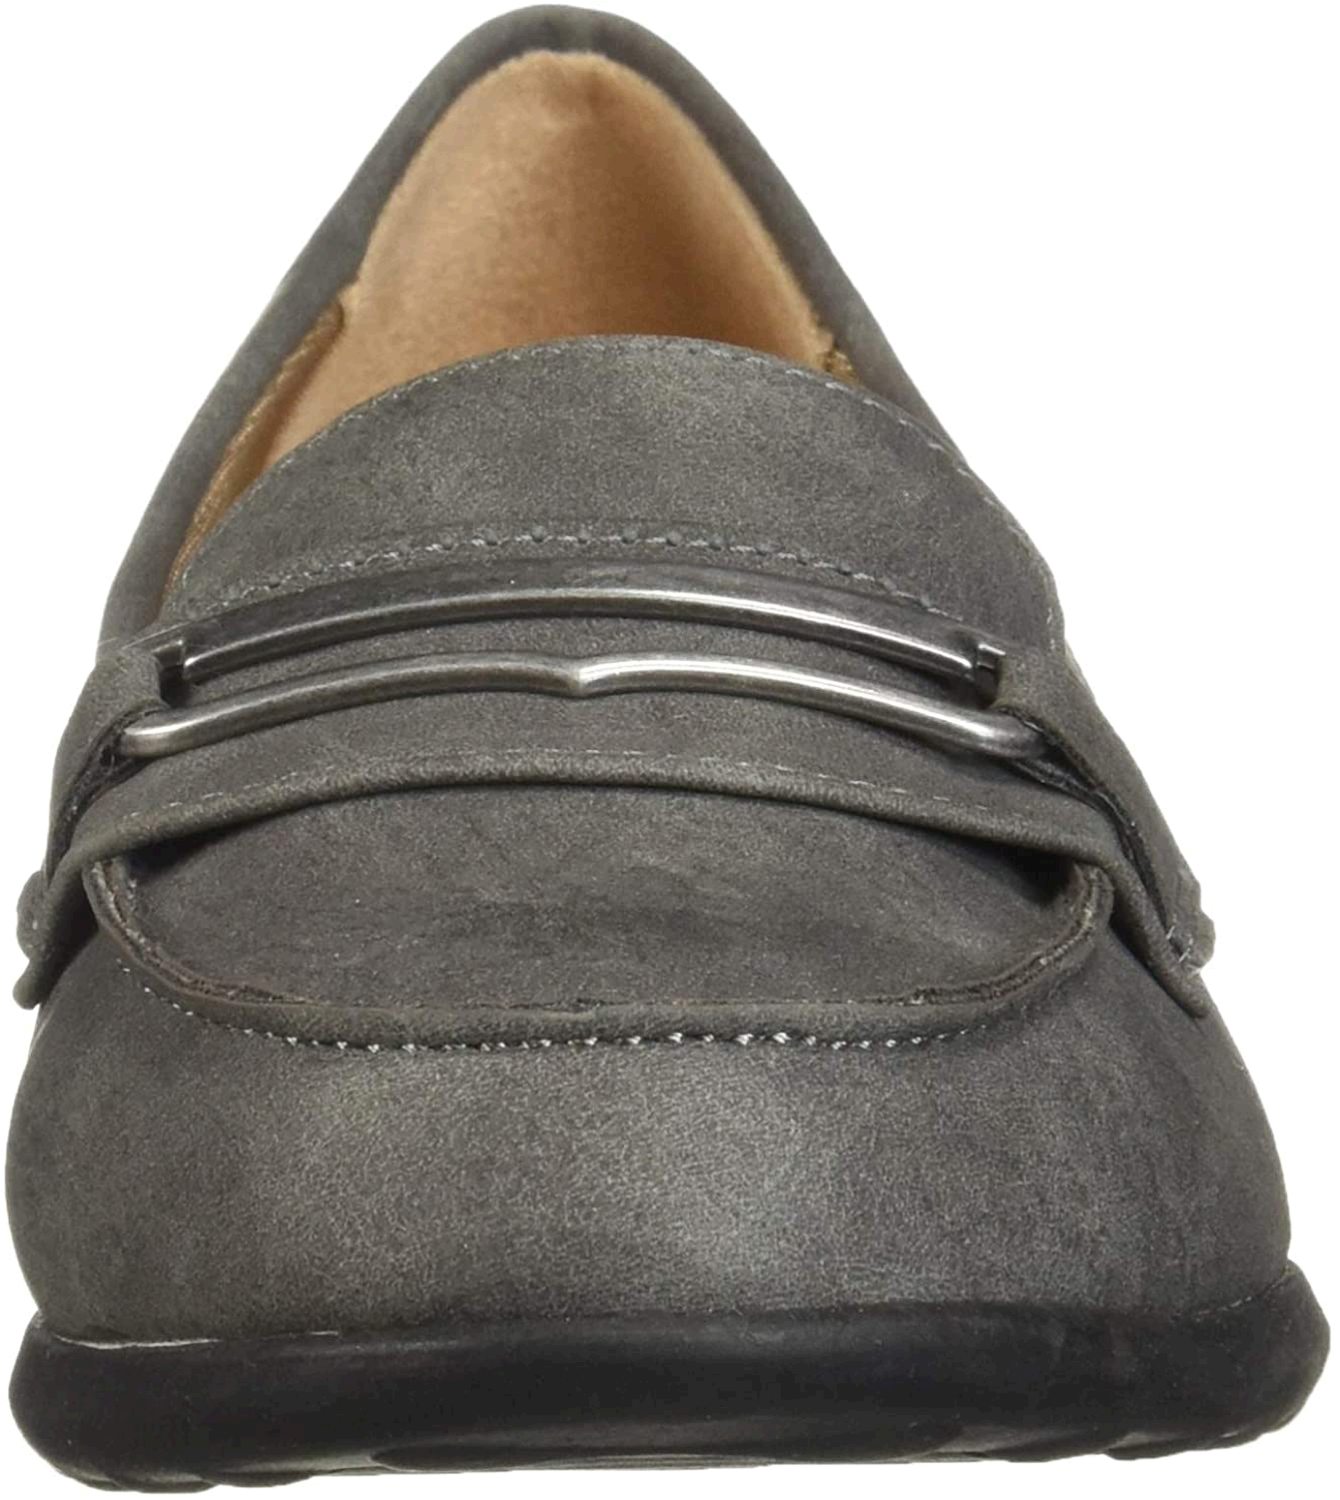 LifeStride Women's Phoebe Casual Loafer Flat, Grey, Size 6.0 q8l3 | eBay